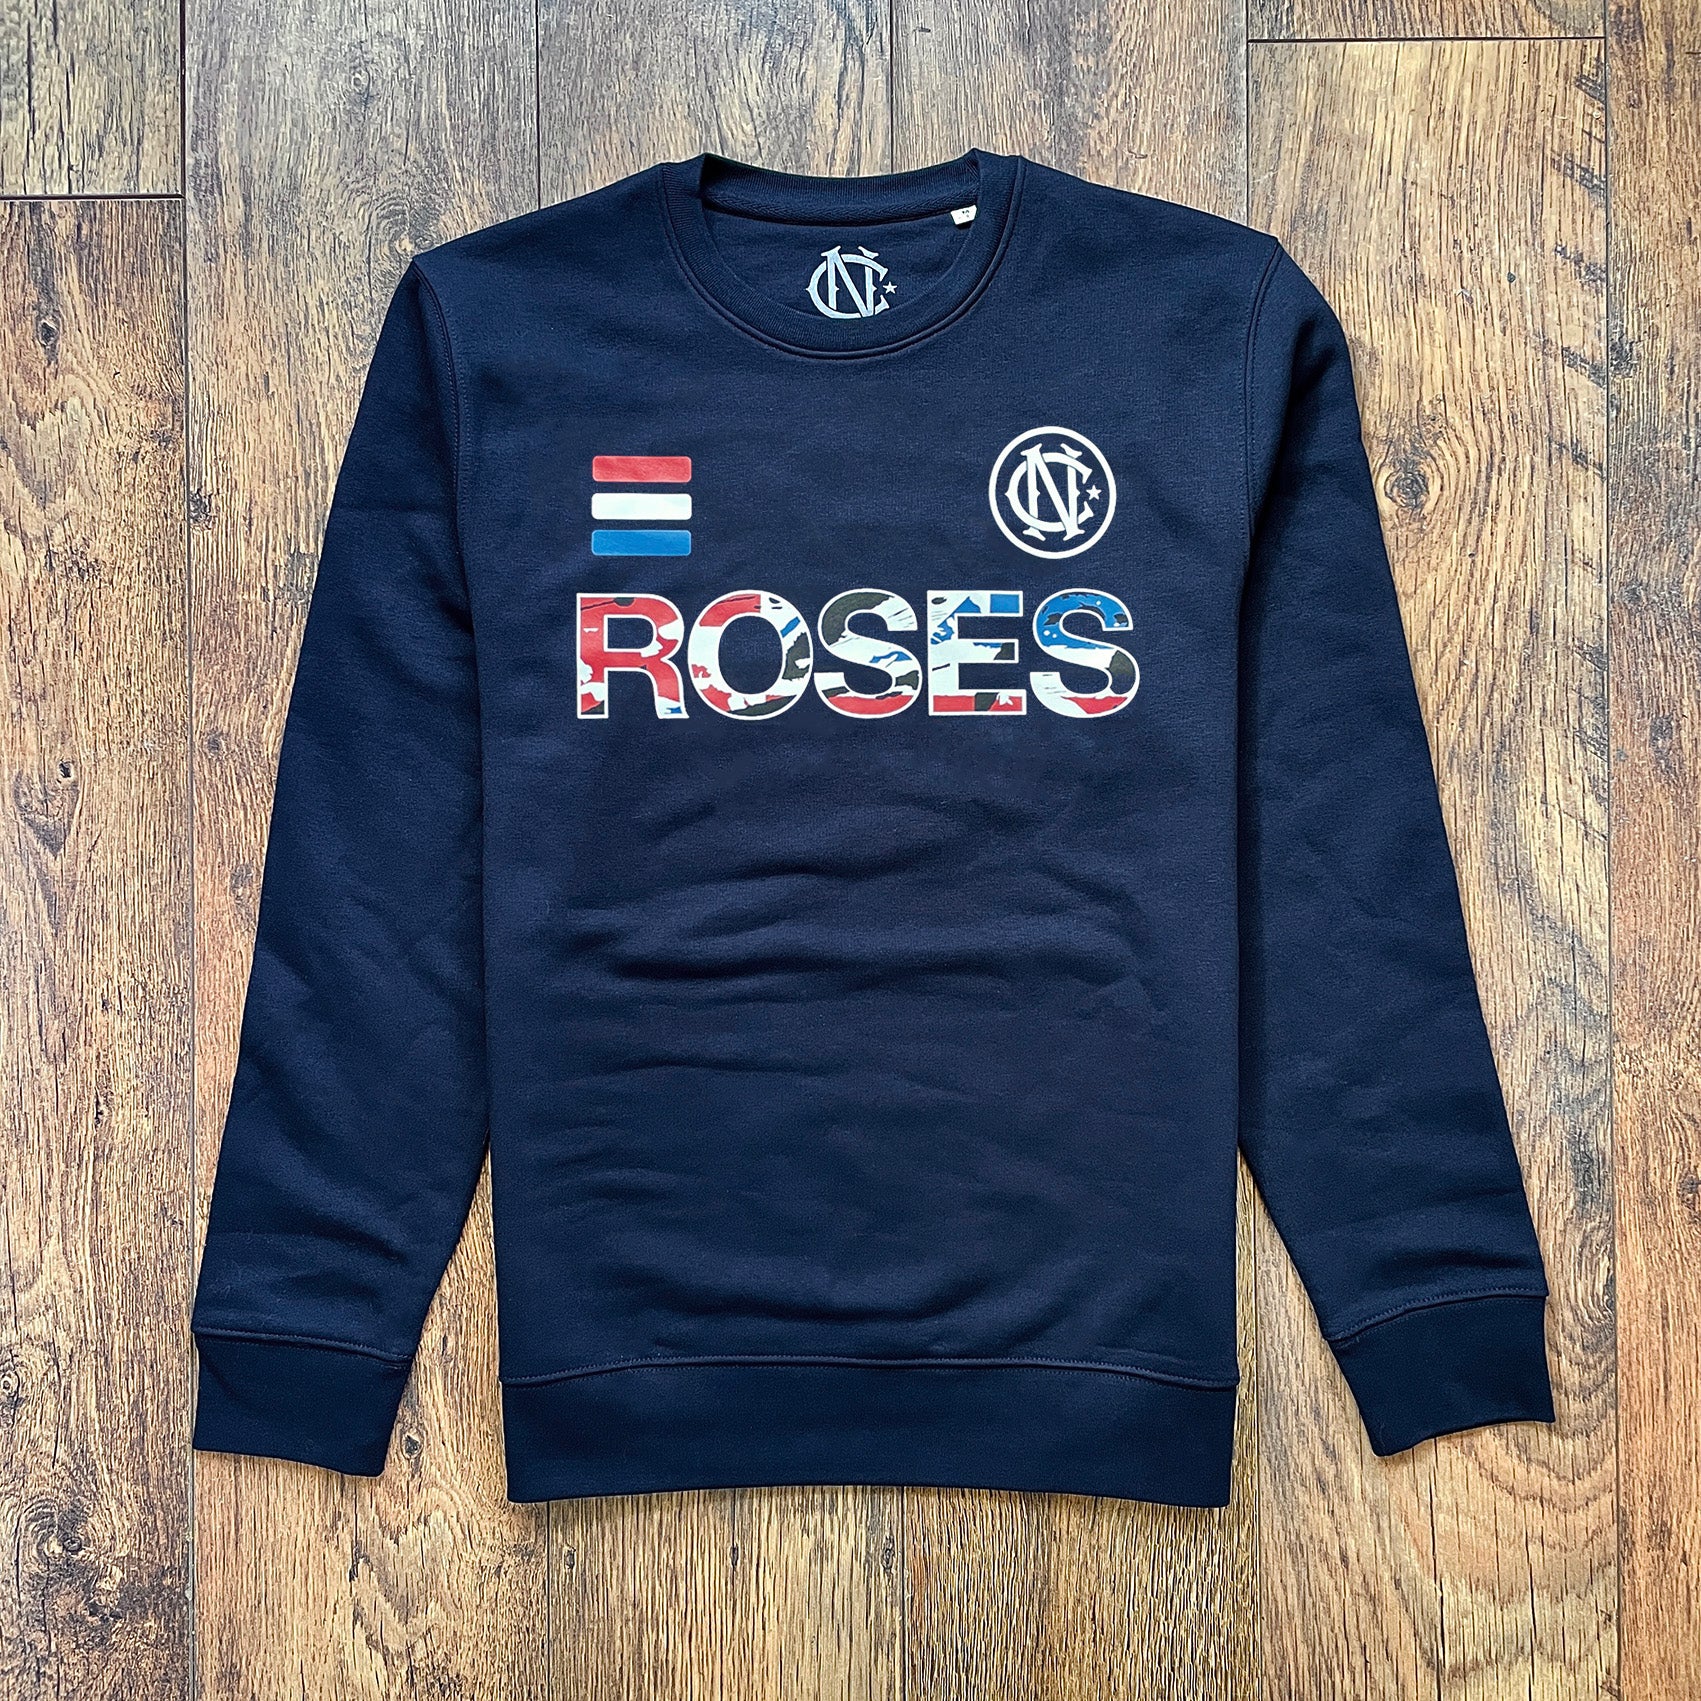 Roses Sweatshirt